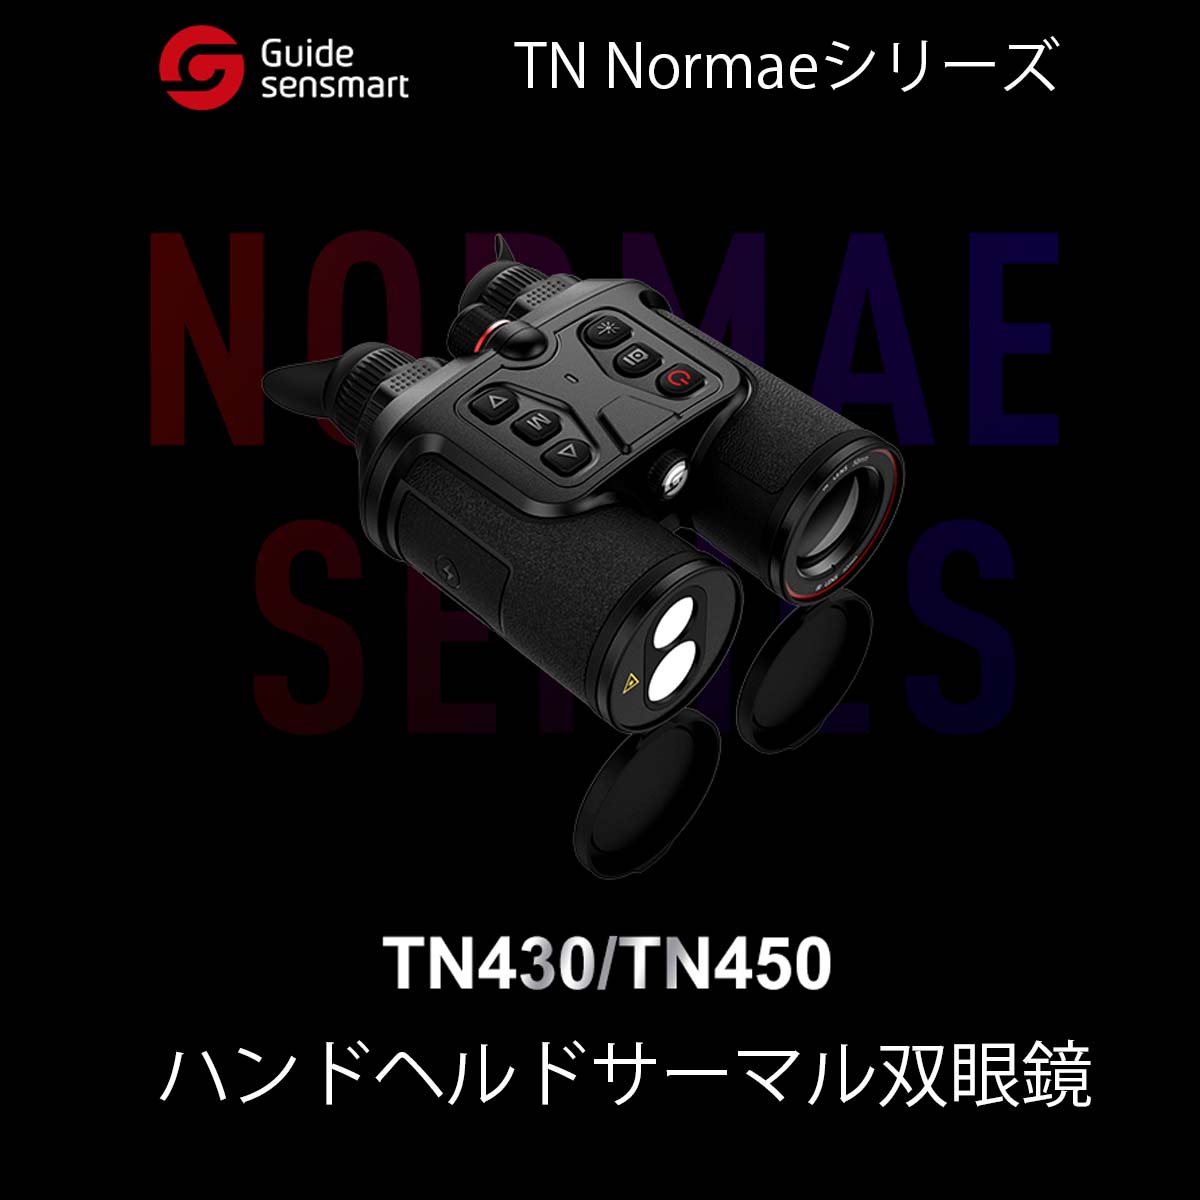 Guide sensmart ハンドヘルドサーマル双眼鏡 TN430（TN Normaeシリーズ） 光学機器,暗視スコープ  タイムテクノロジー公式ショップ